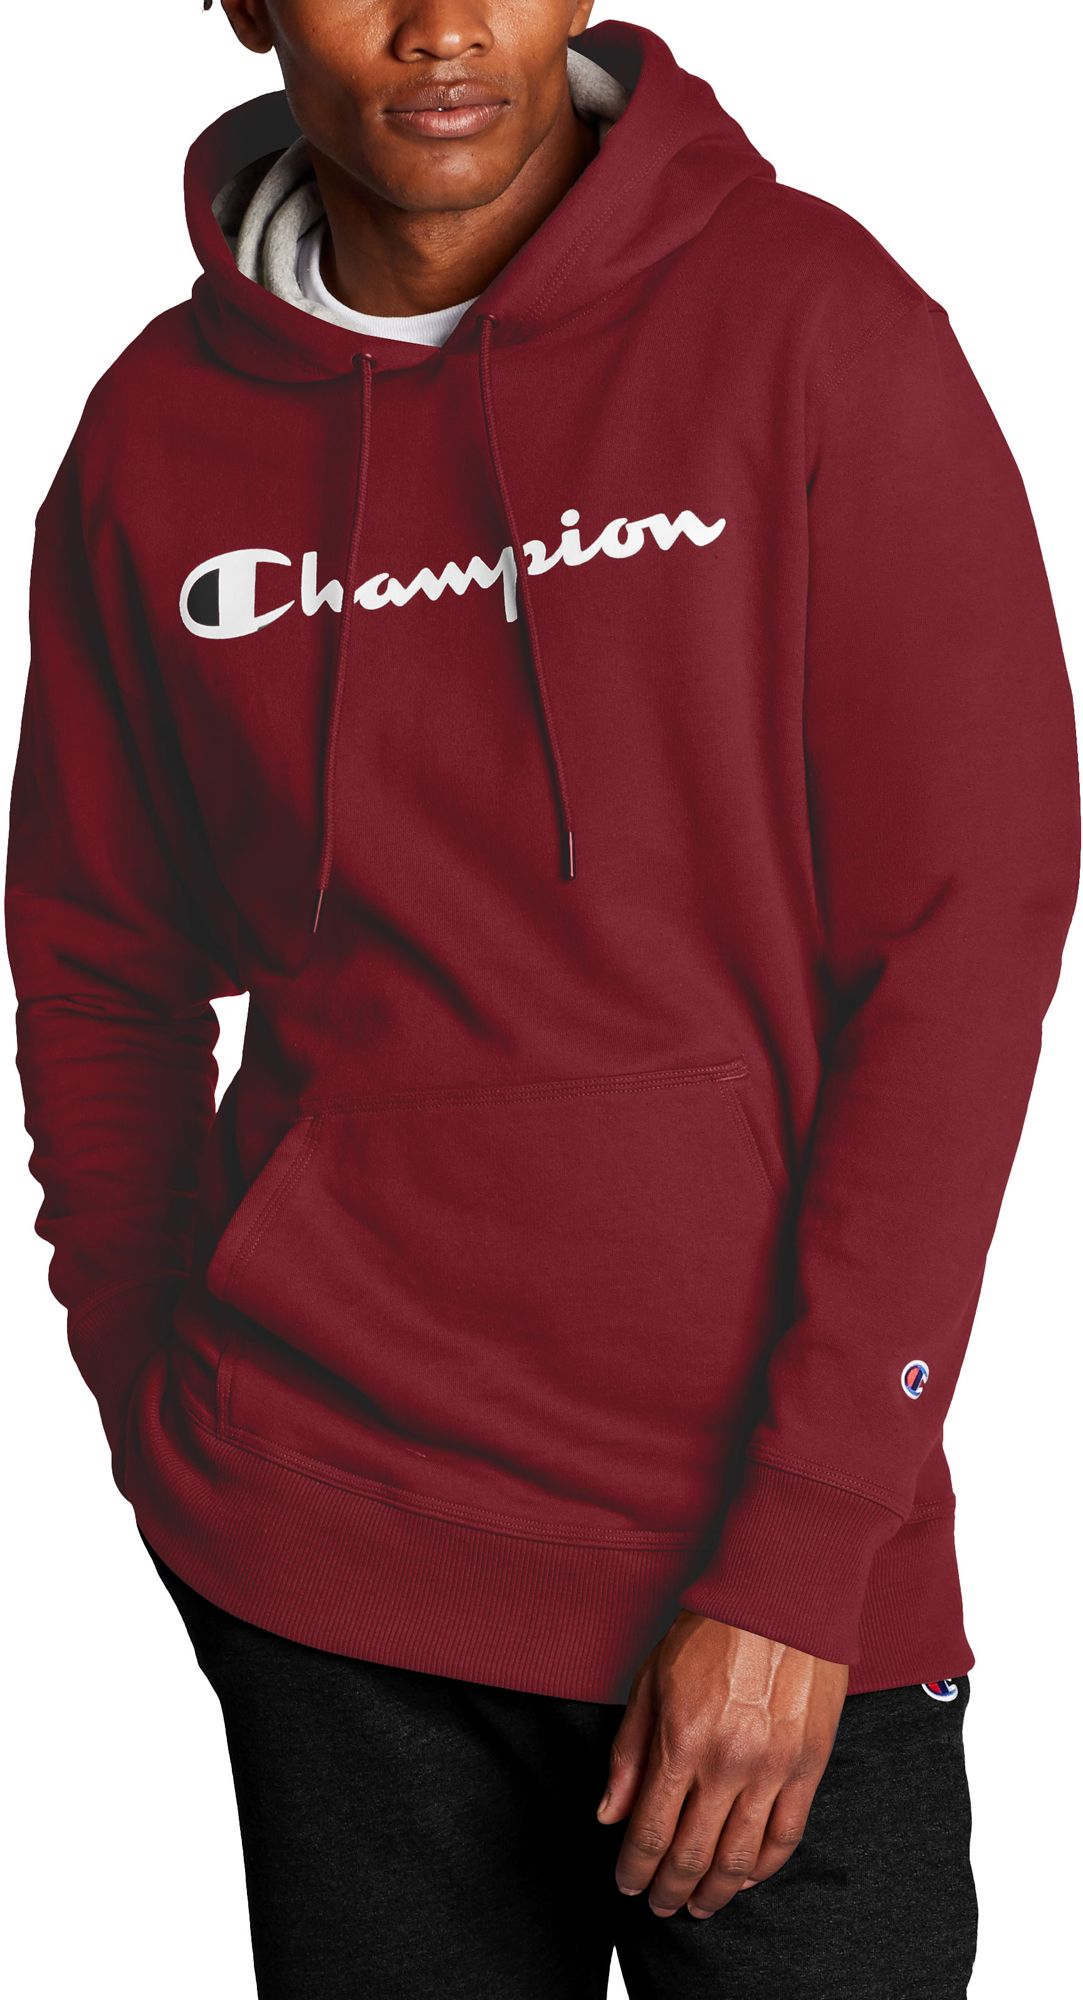 dicks champion sweatshirt